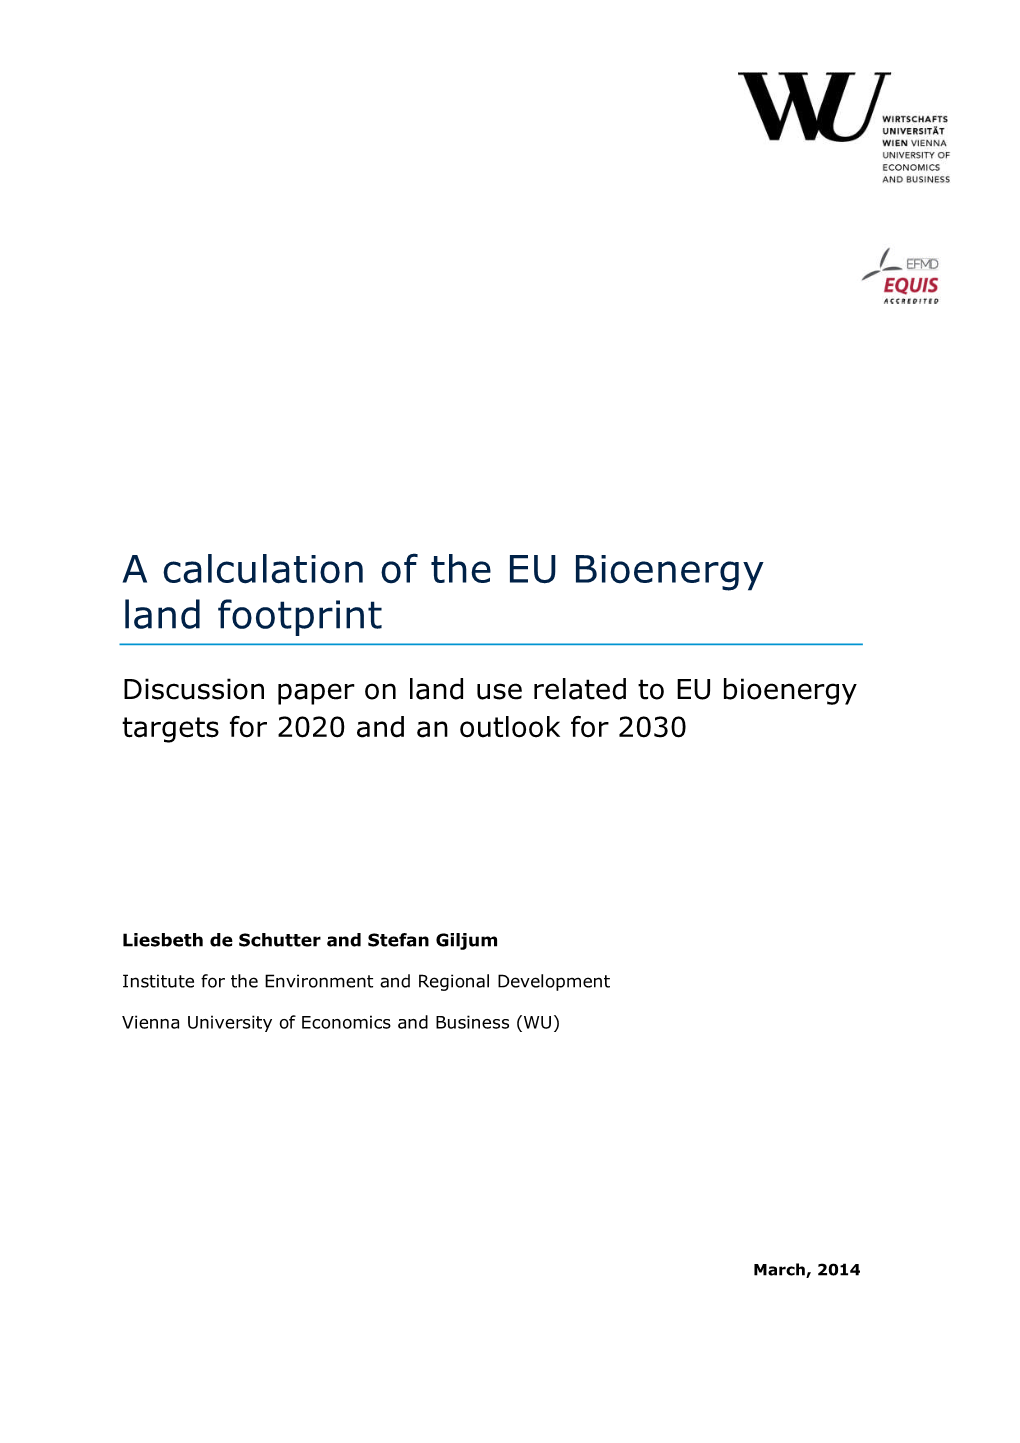 A Calculation of the EU Bioenergy Land Footprint